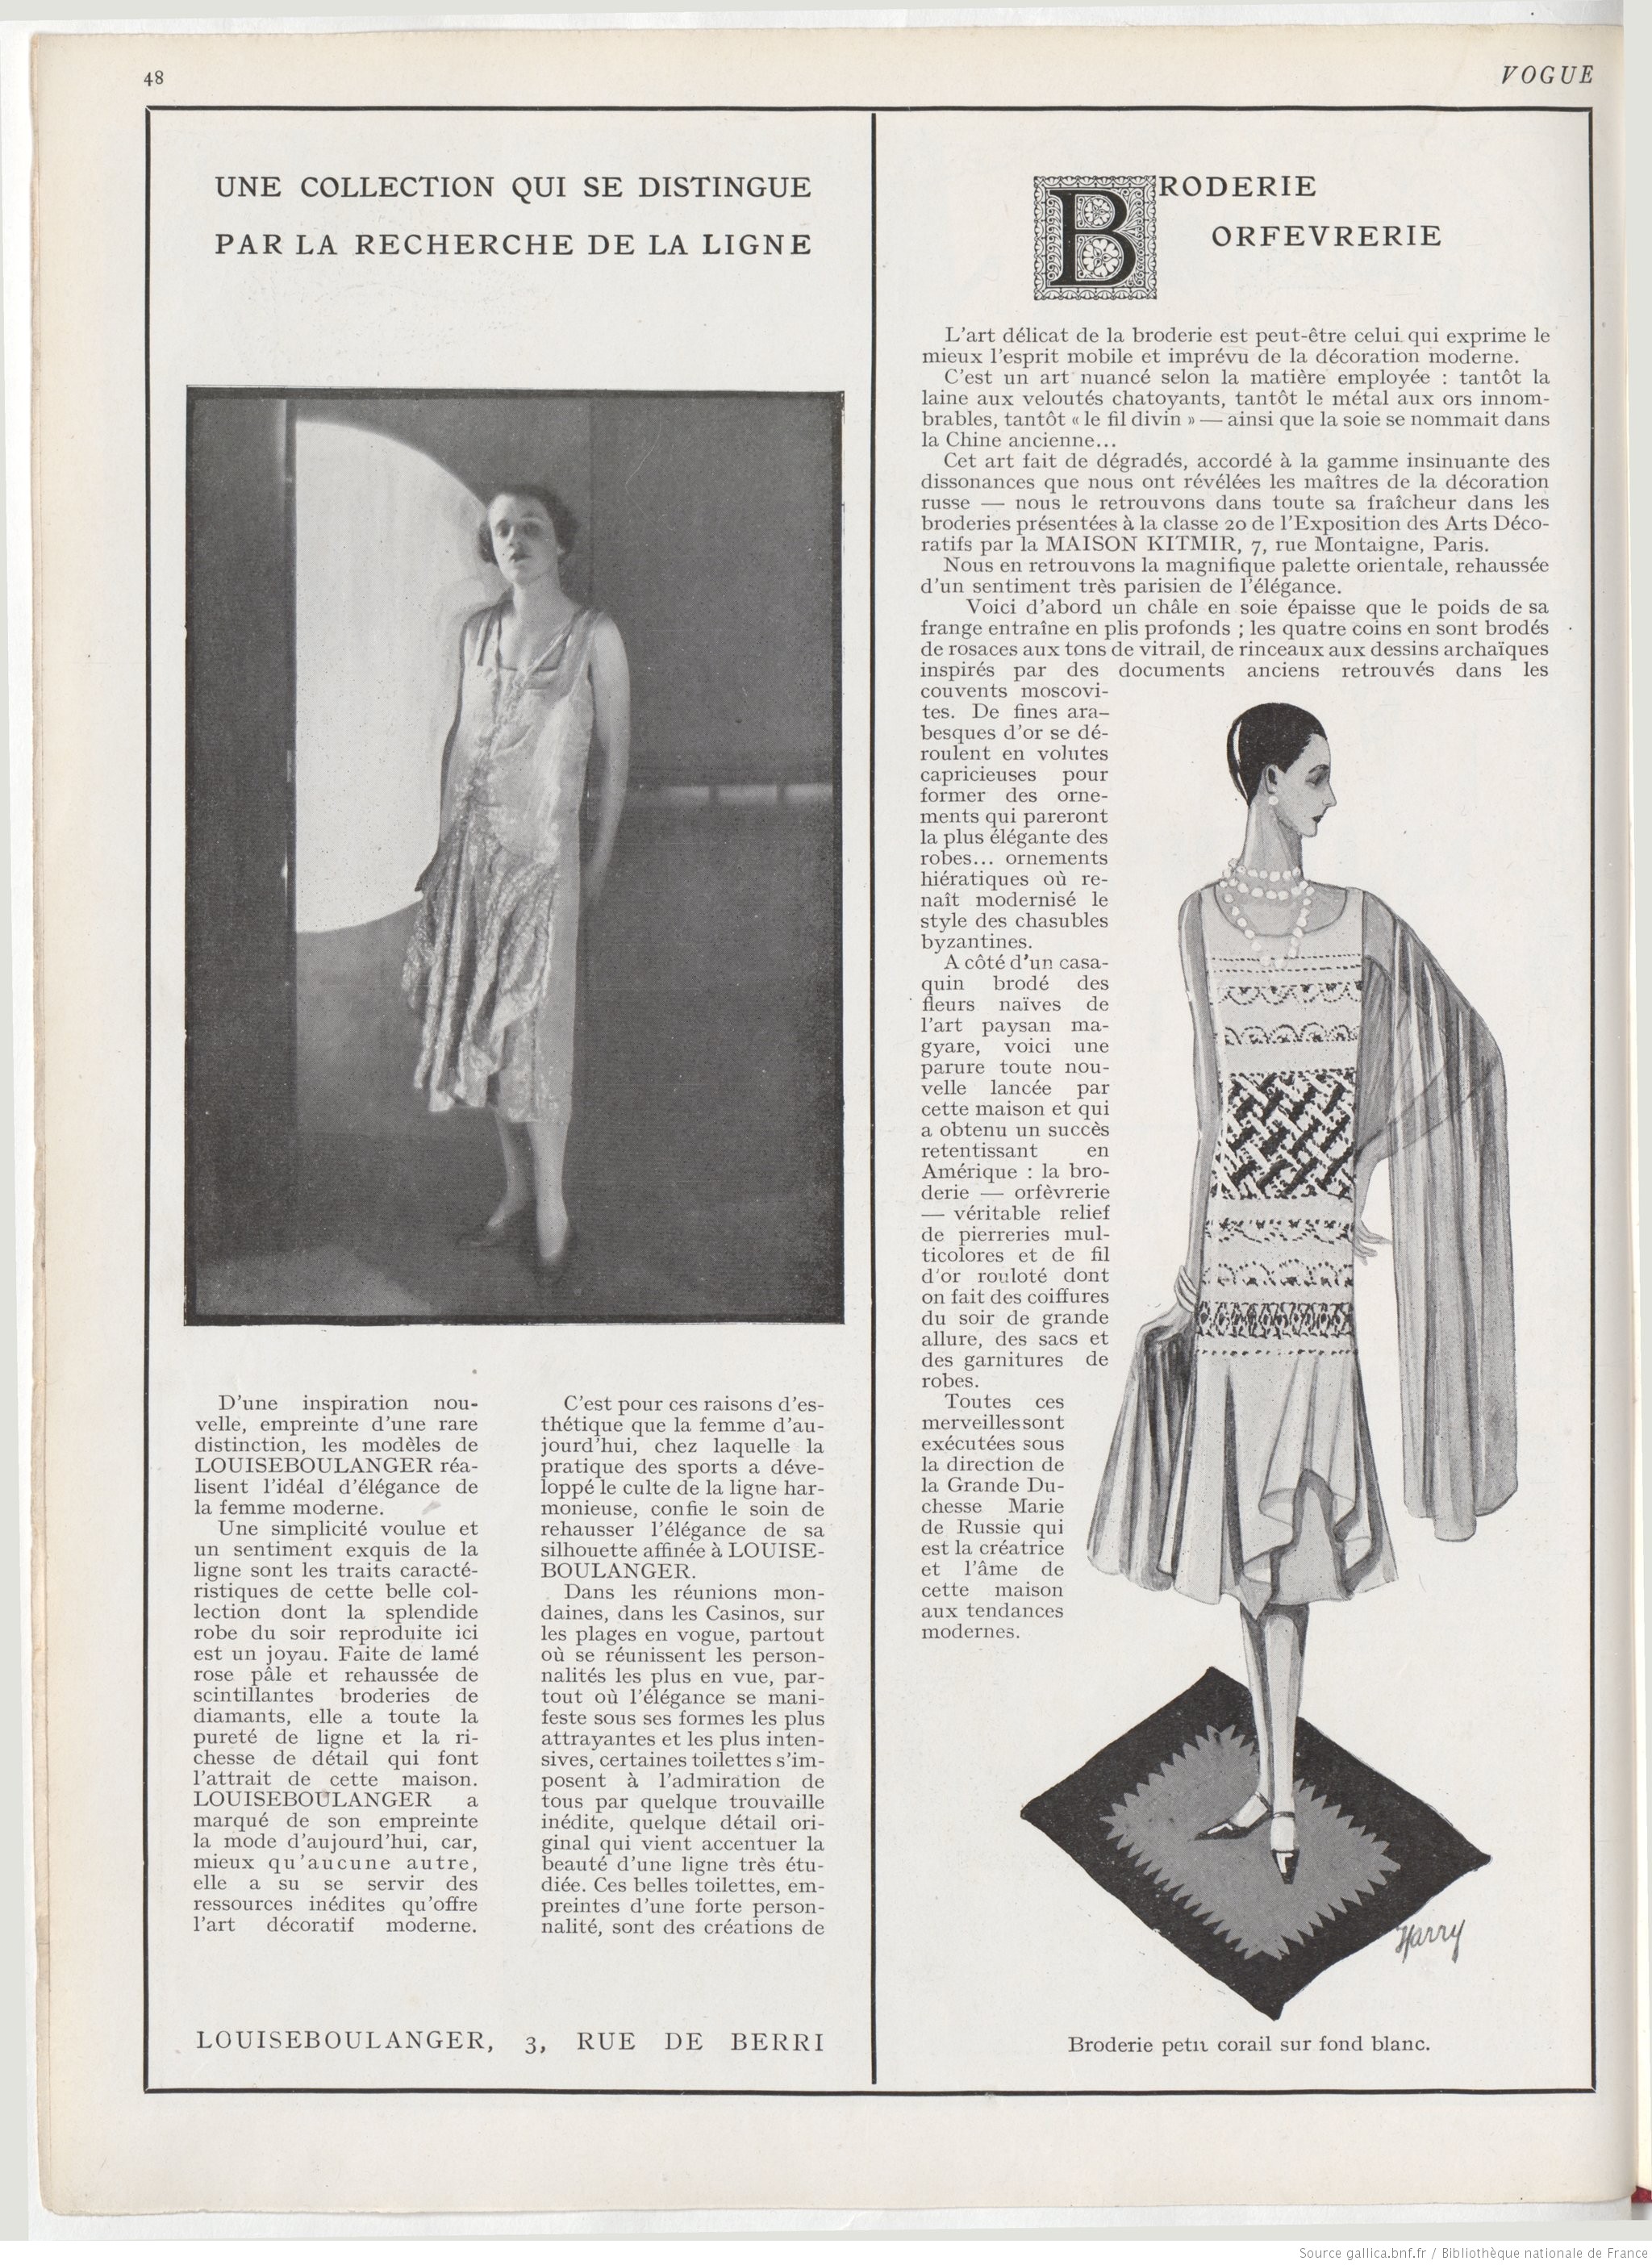   Vogue  1925